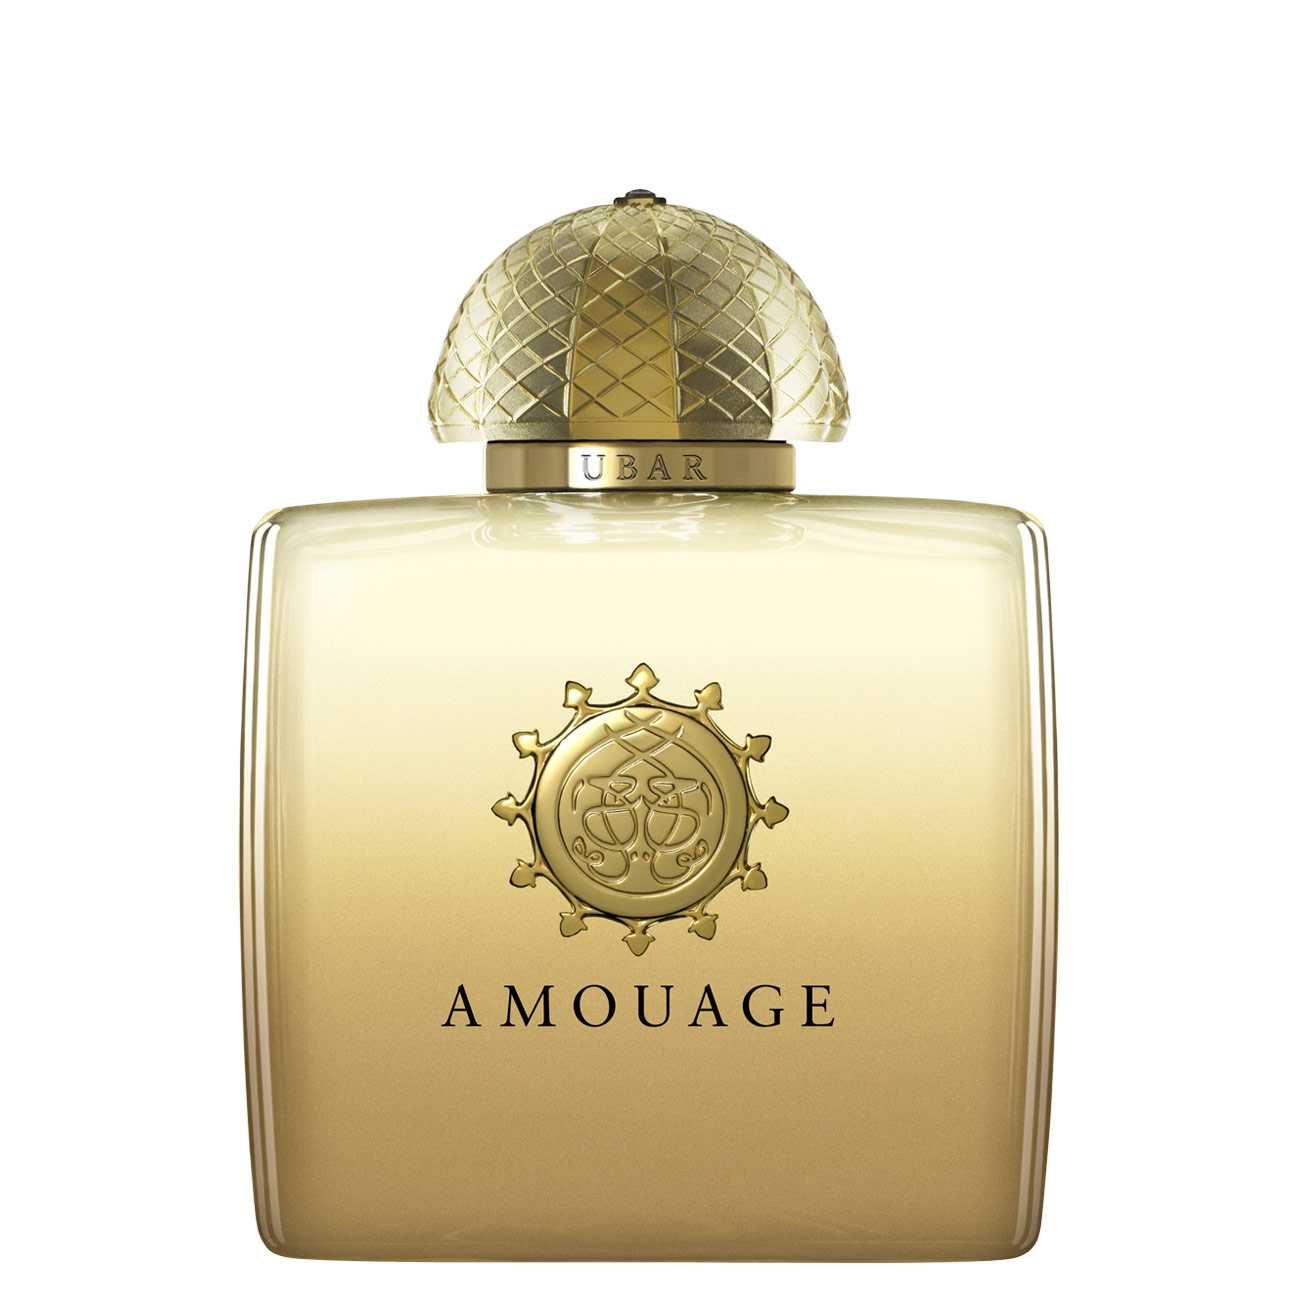 Parfum de niche Amouage UBAR 100 ML 100ml cu comanda online